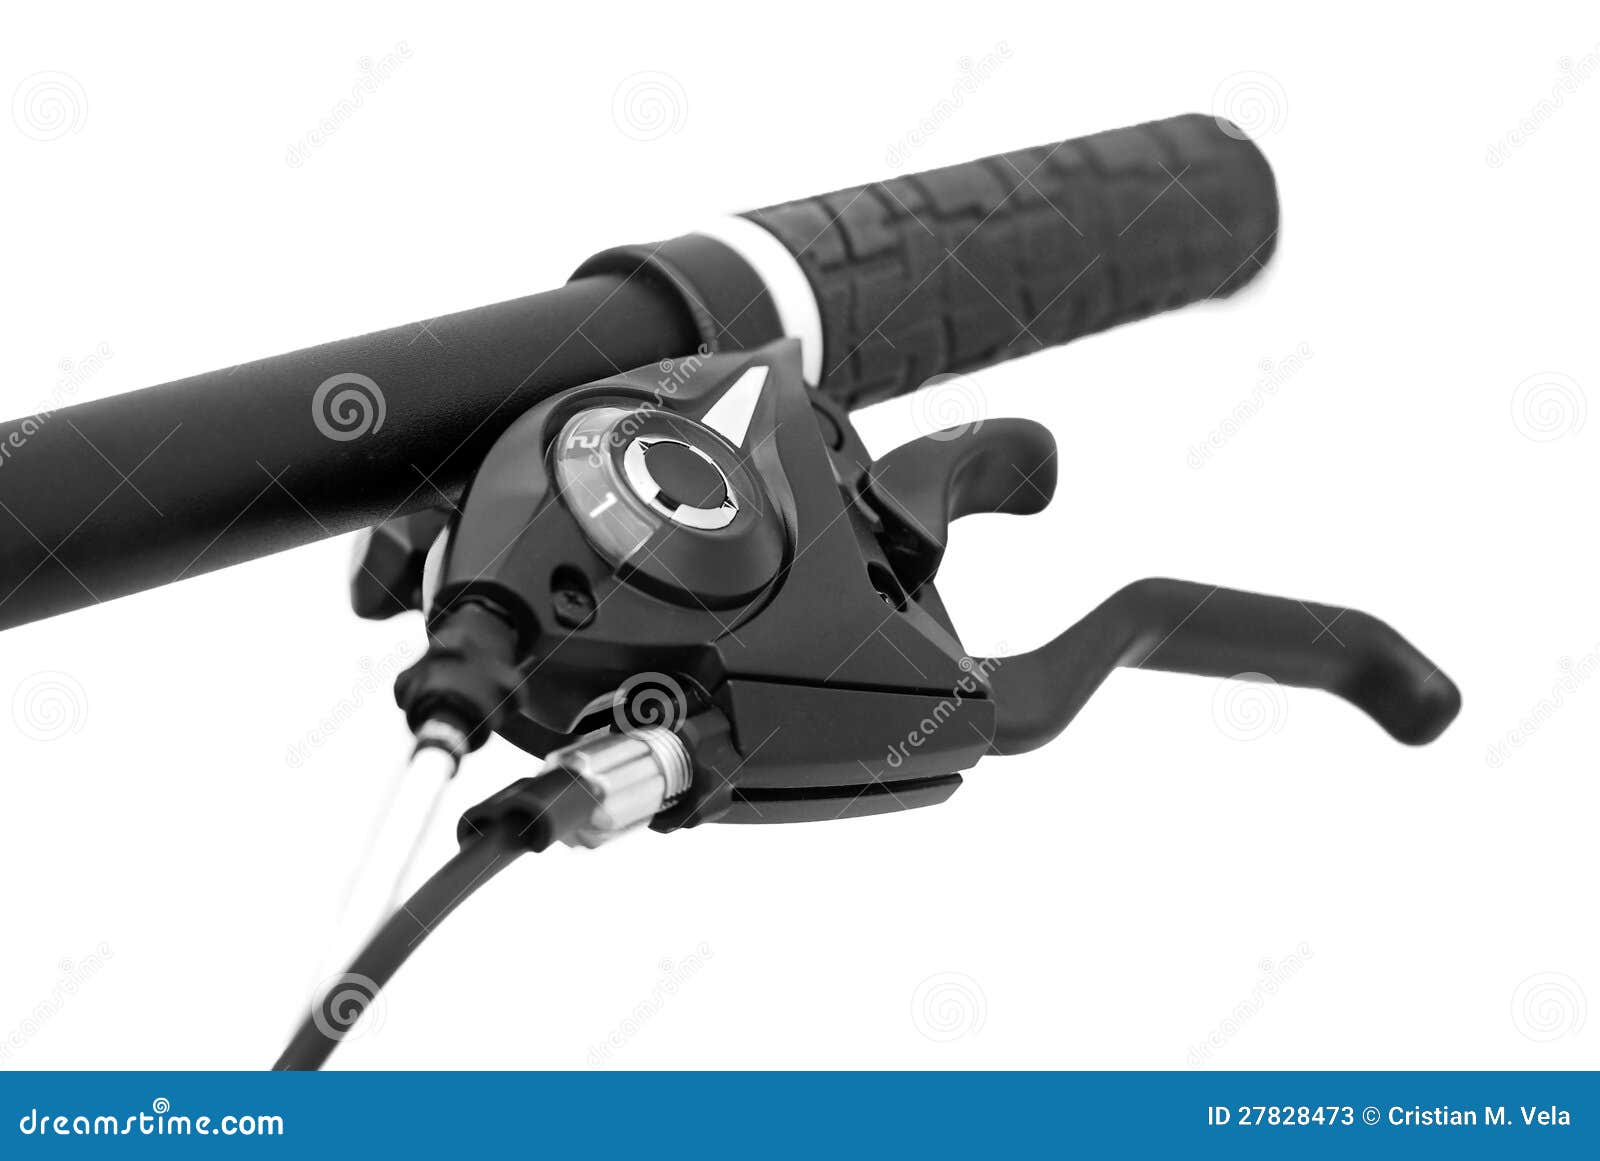 Bicycle hand brake stock image. Image of sport, mechanism - 27828473